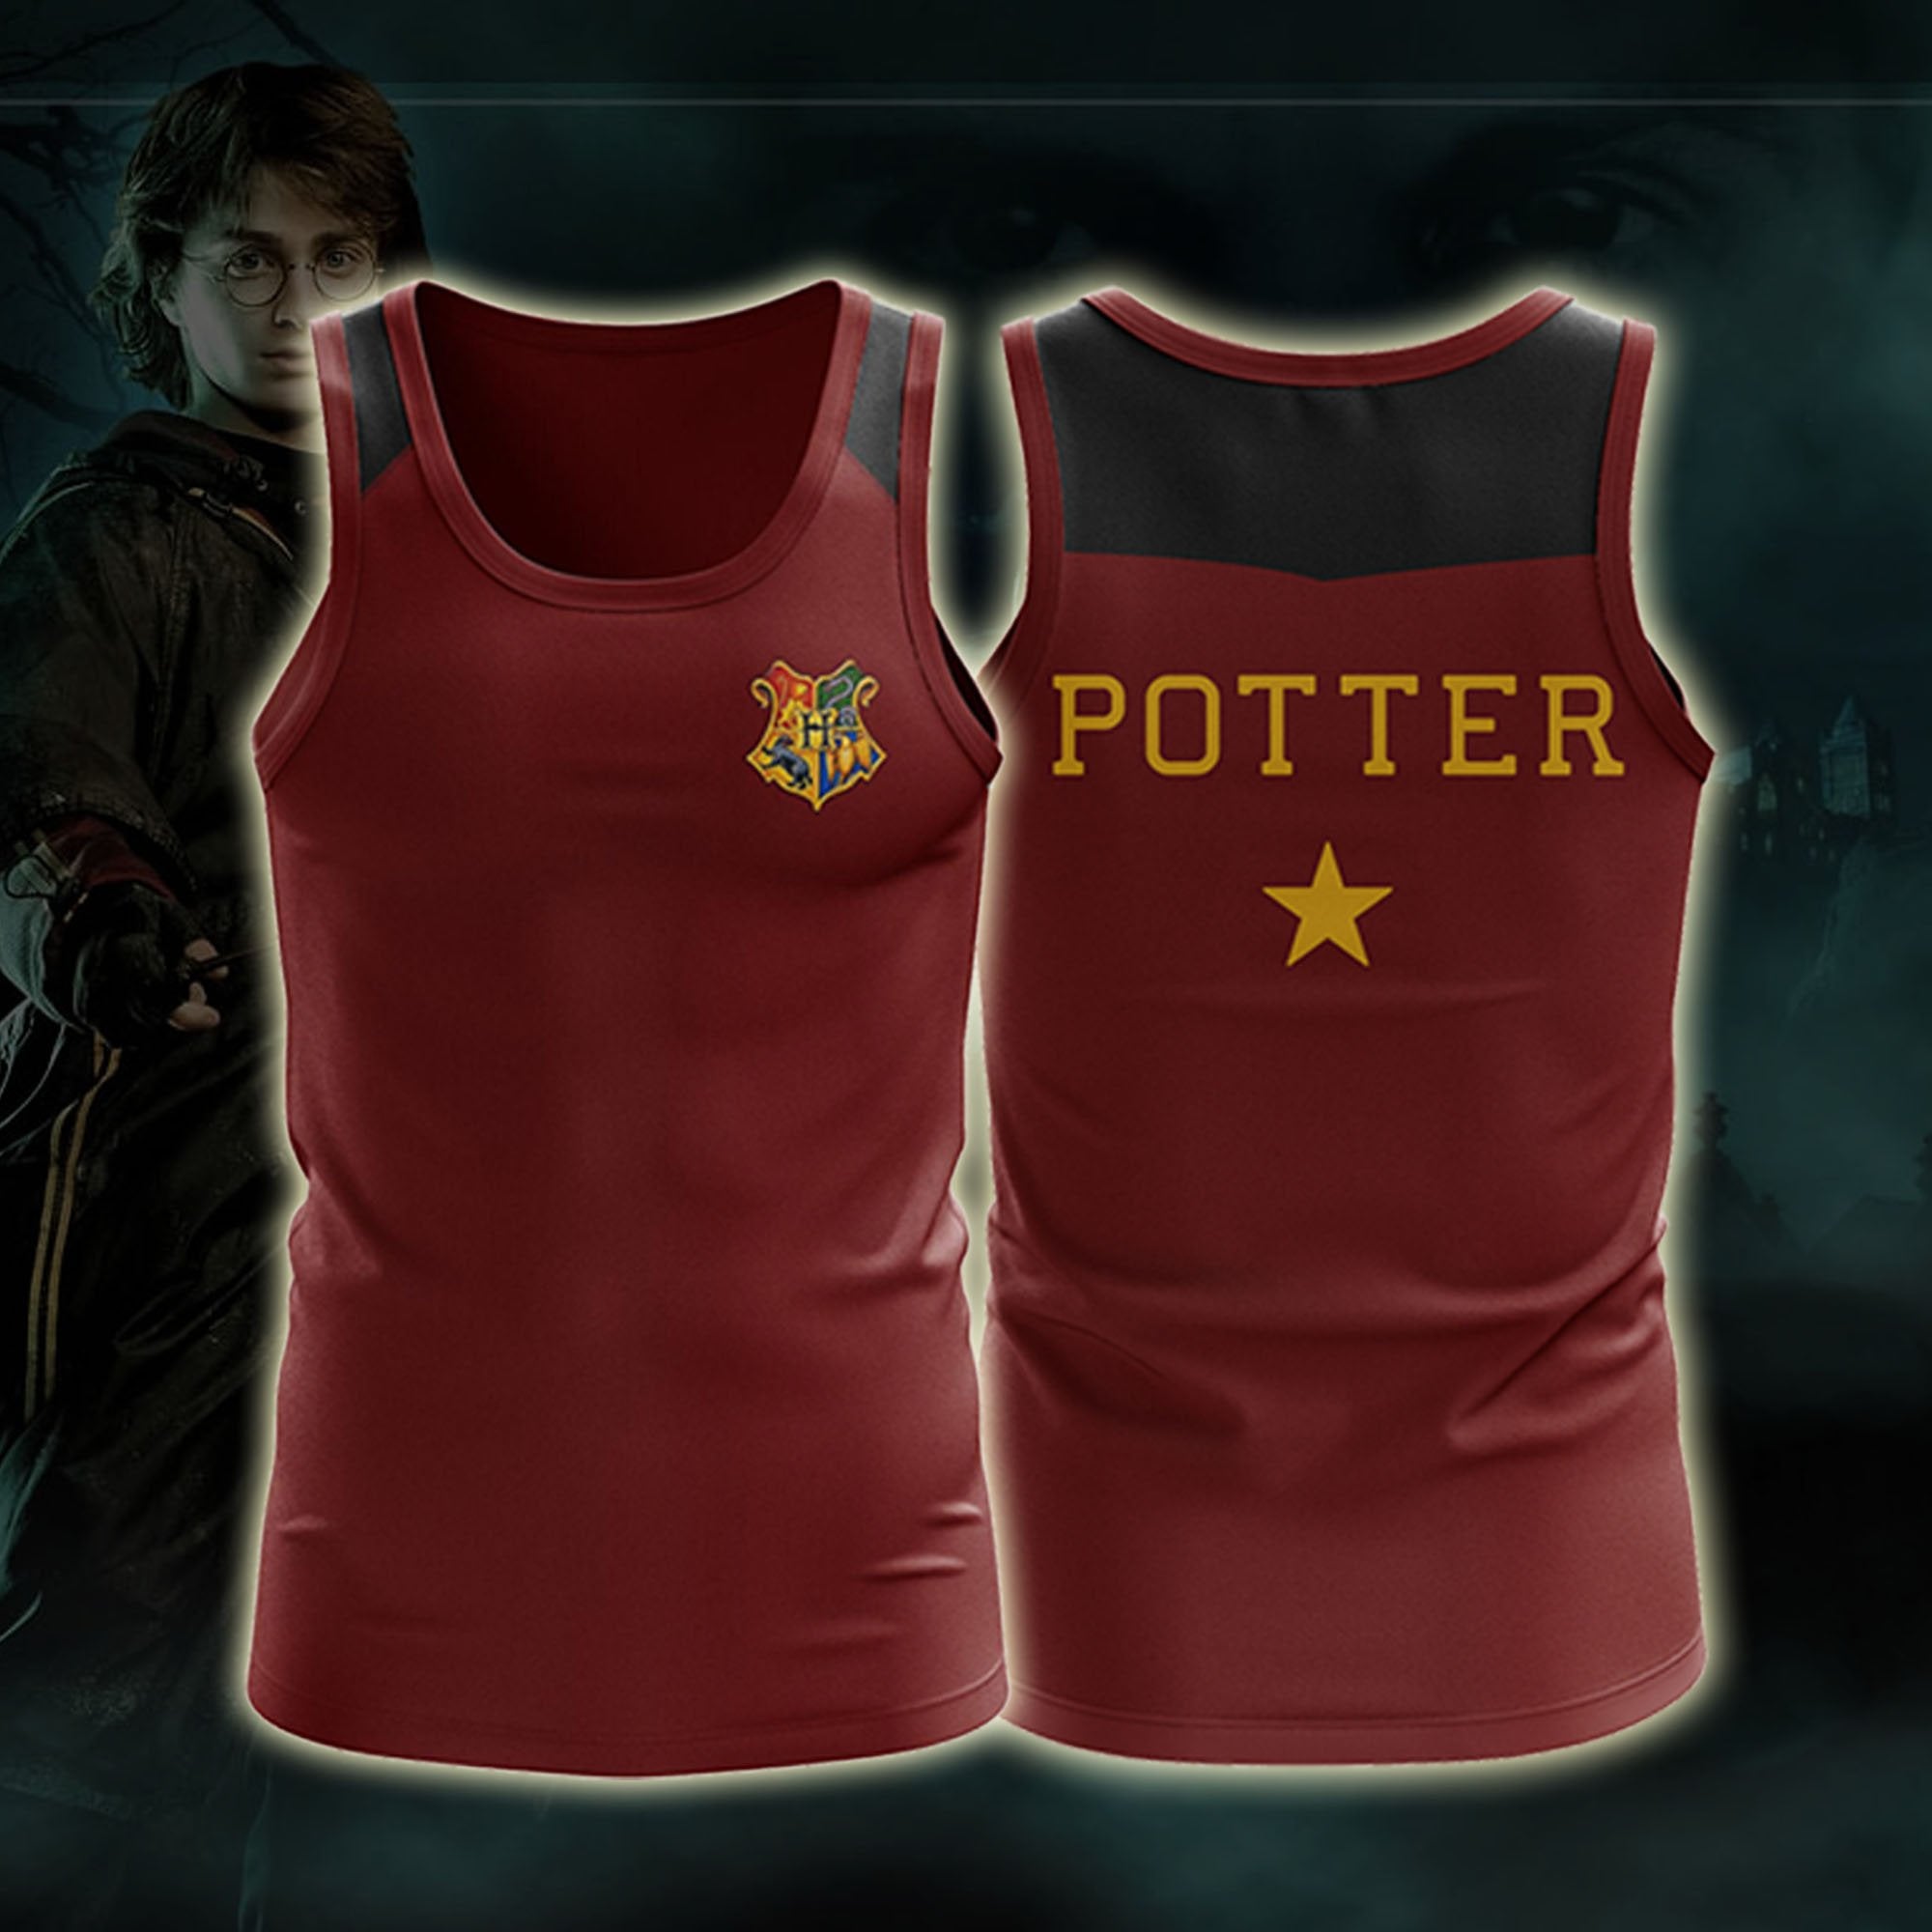 Harry Potter Triwizard Tournament (Potter) 3D Tank Top S  